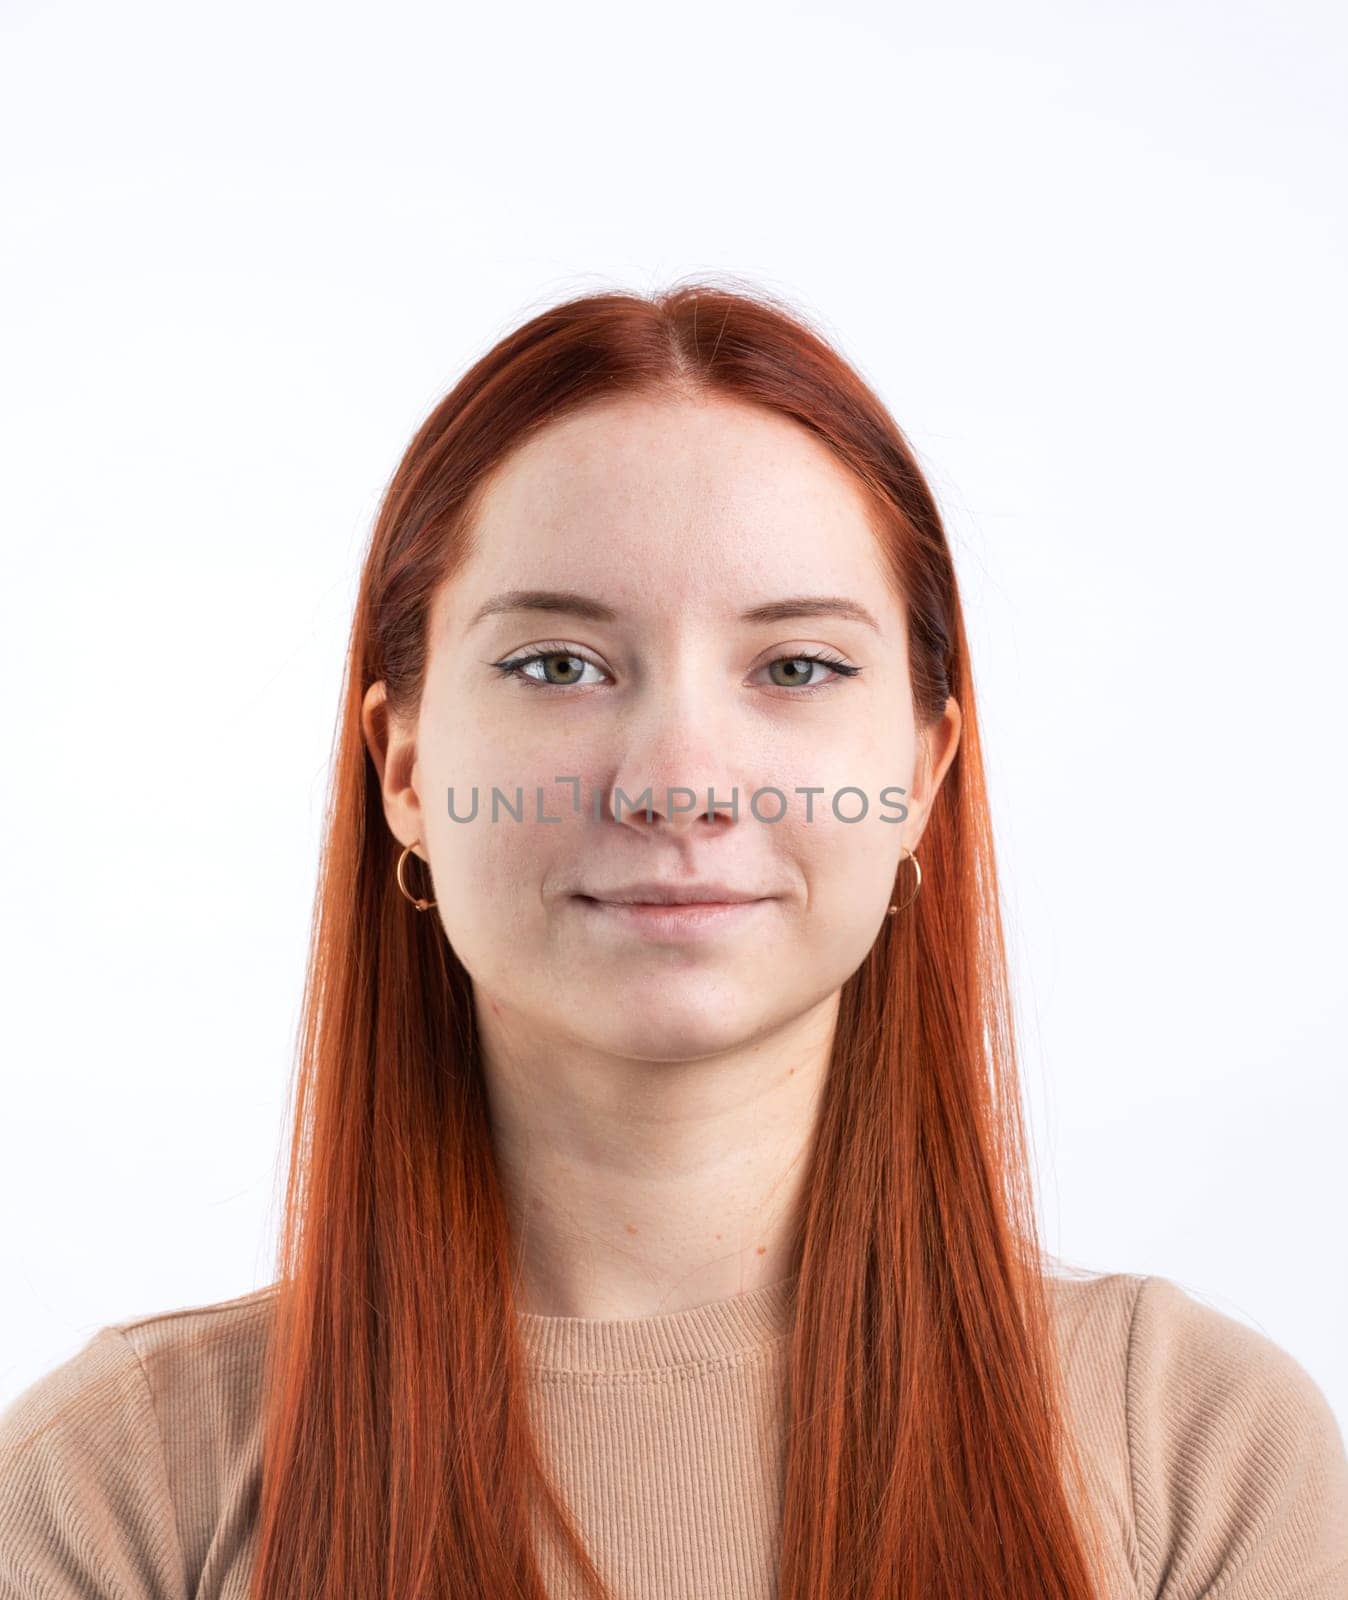 Biometric Passport photo of attractive female, natural look healthy skin by Desperada